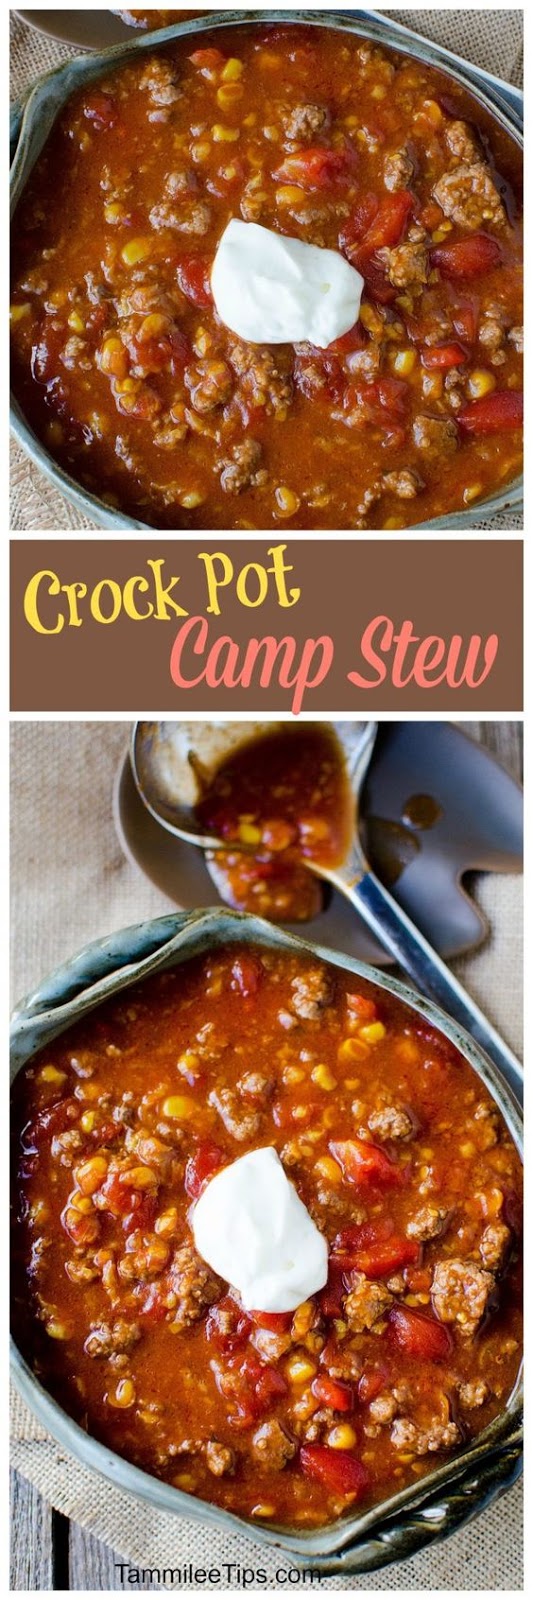 Slow Cooker Crock Pot Camp Stew Recipe